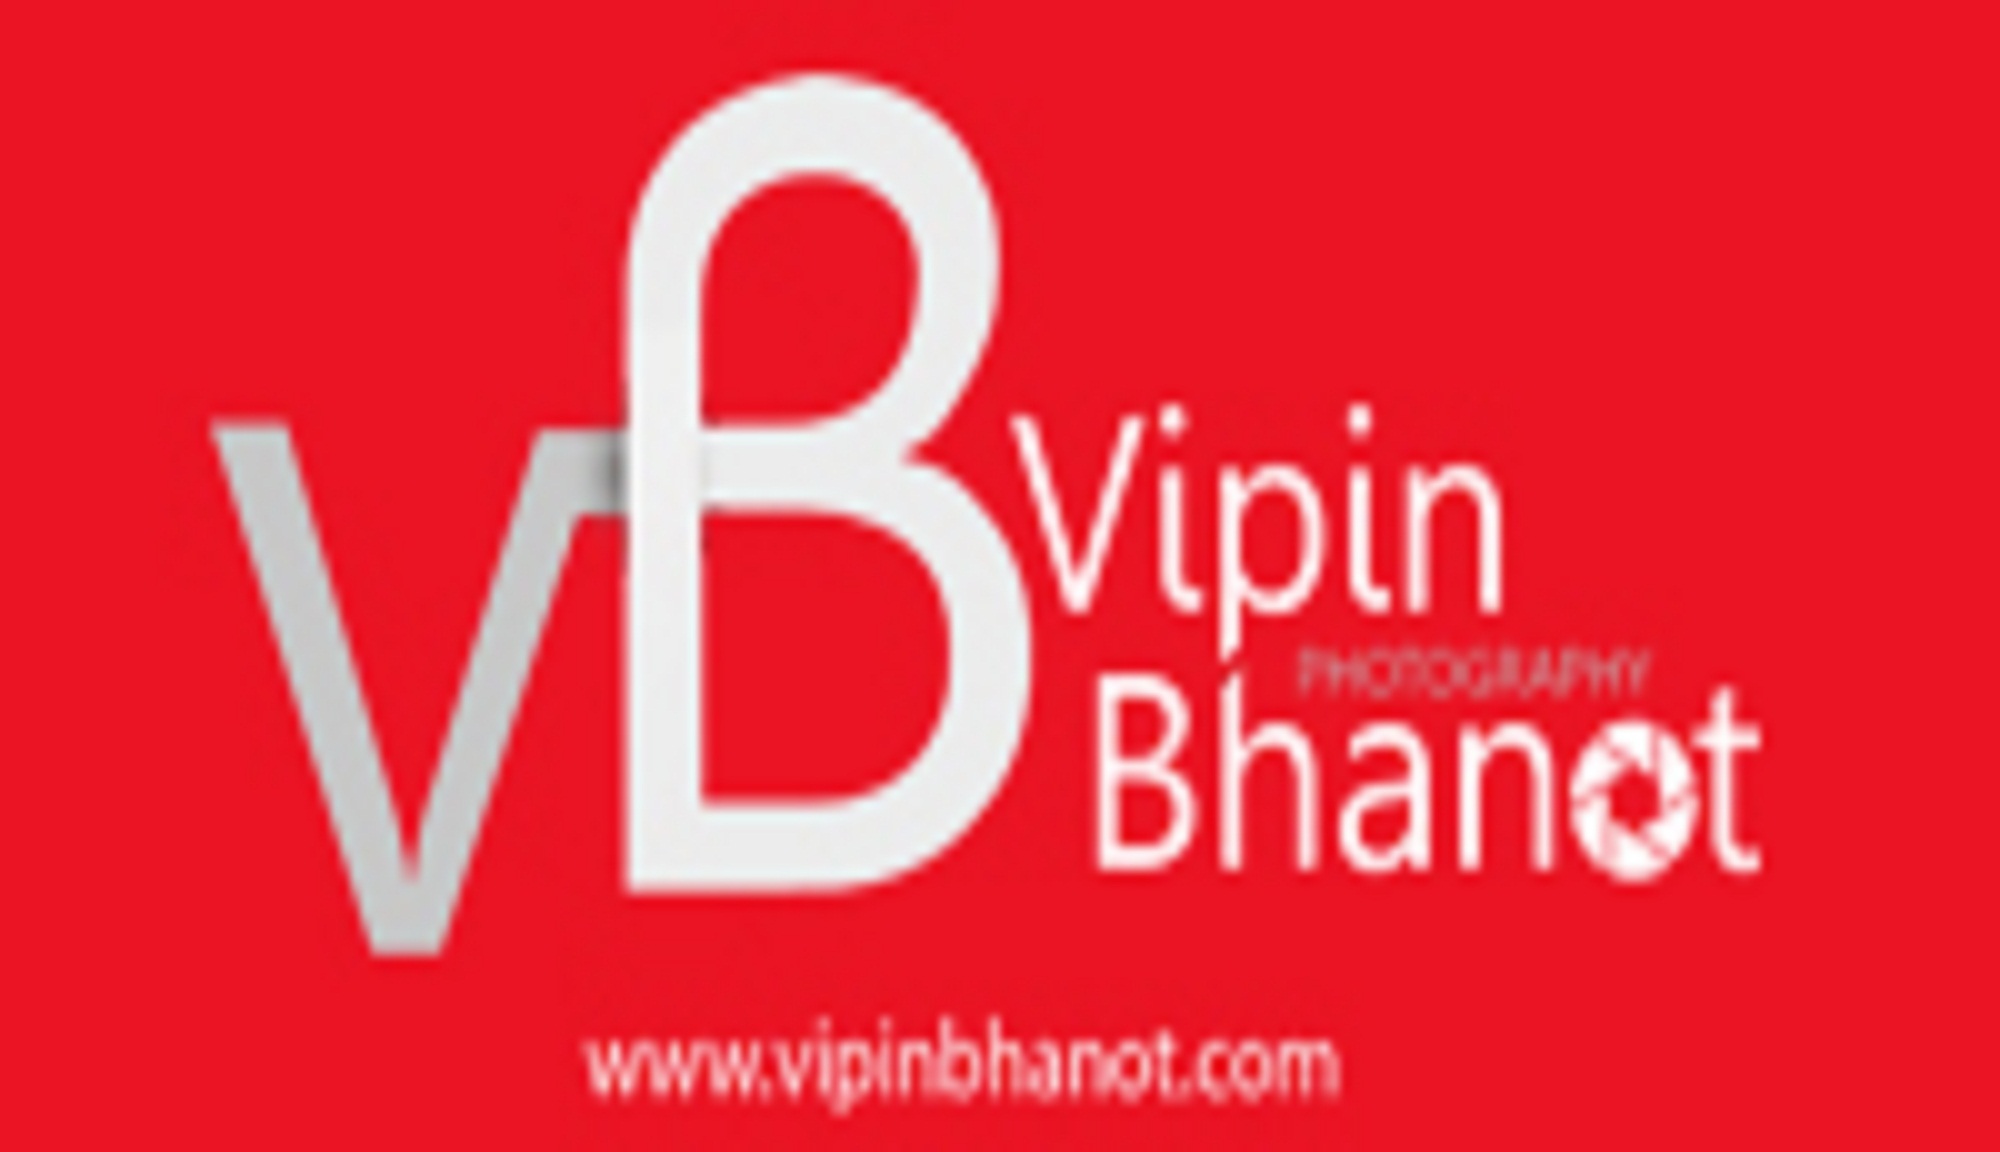 Vipin Bhanot